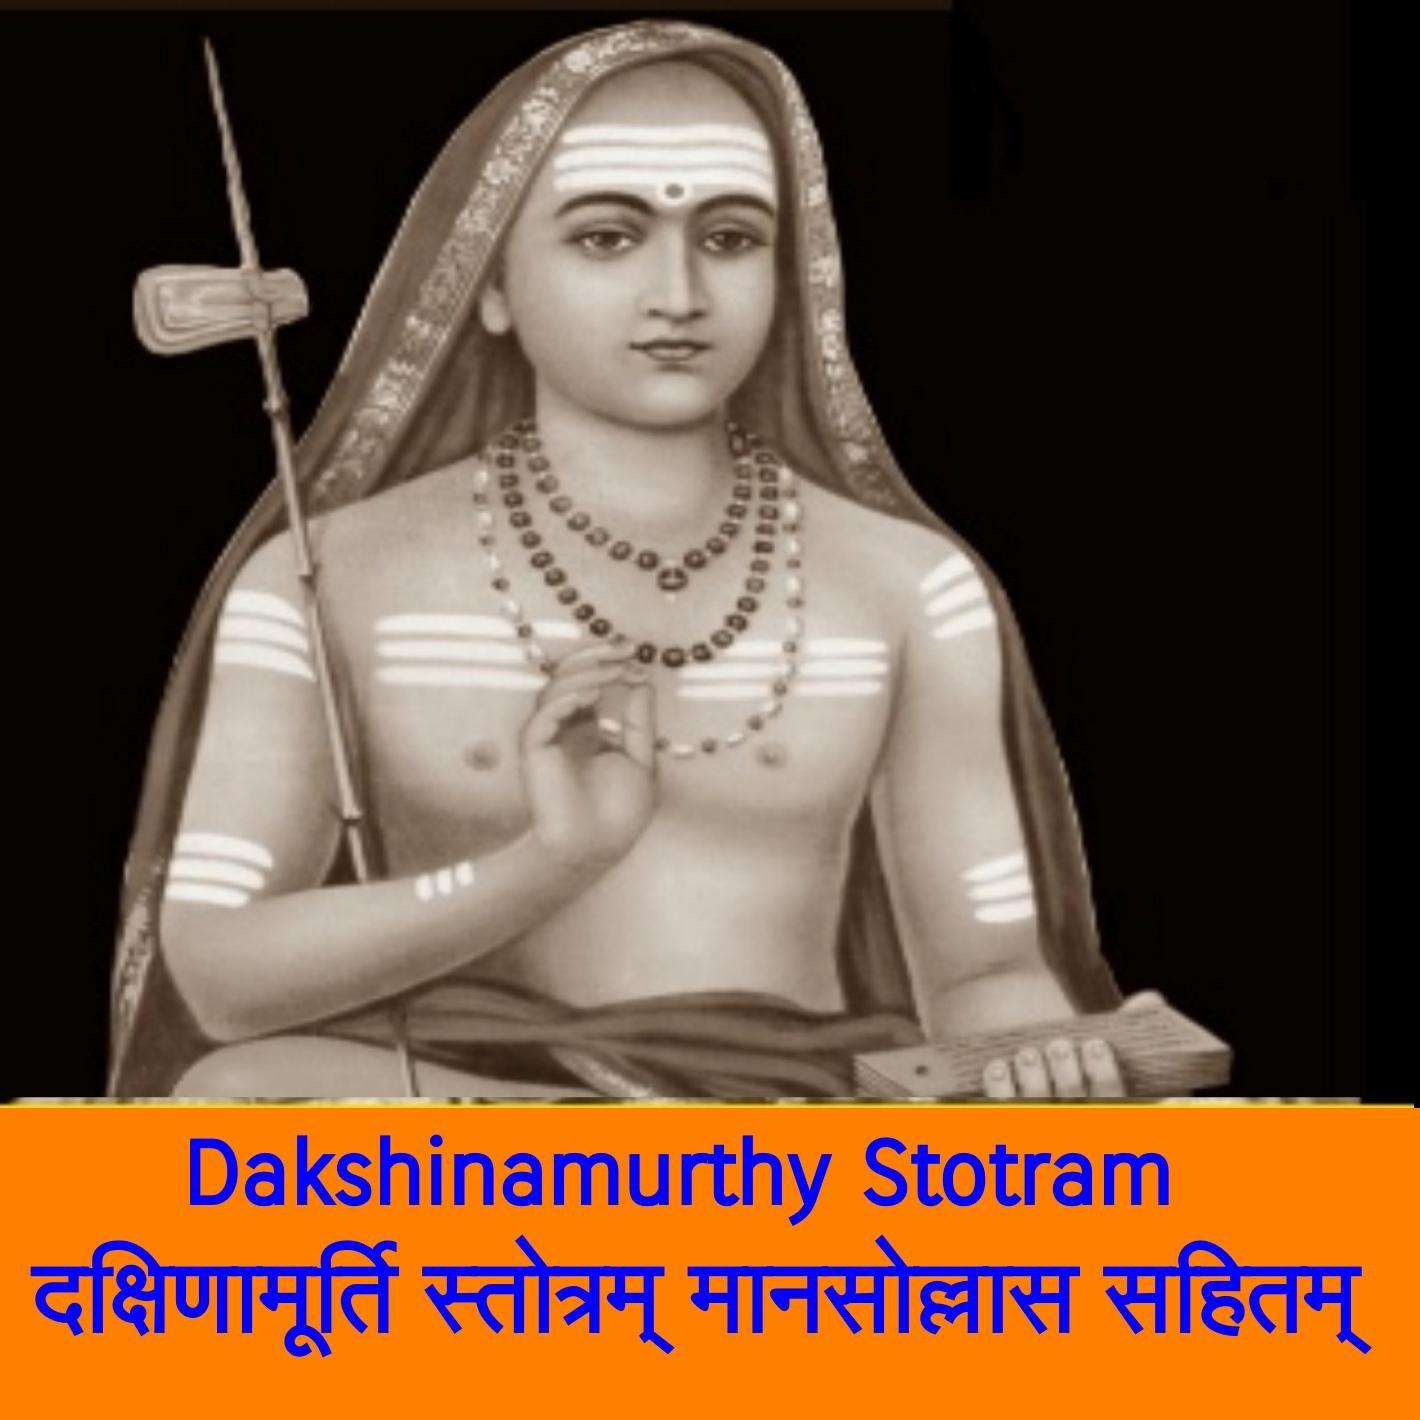 Dakshinamurthy Stotram - Manasollasa Varthikam